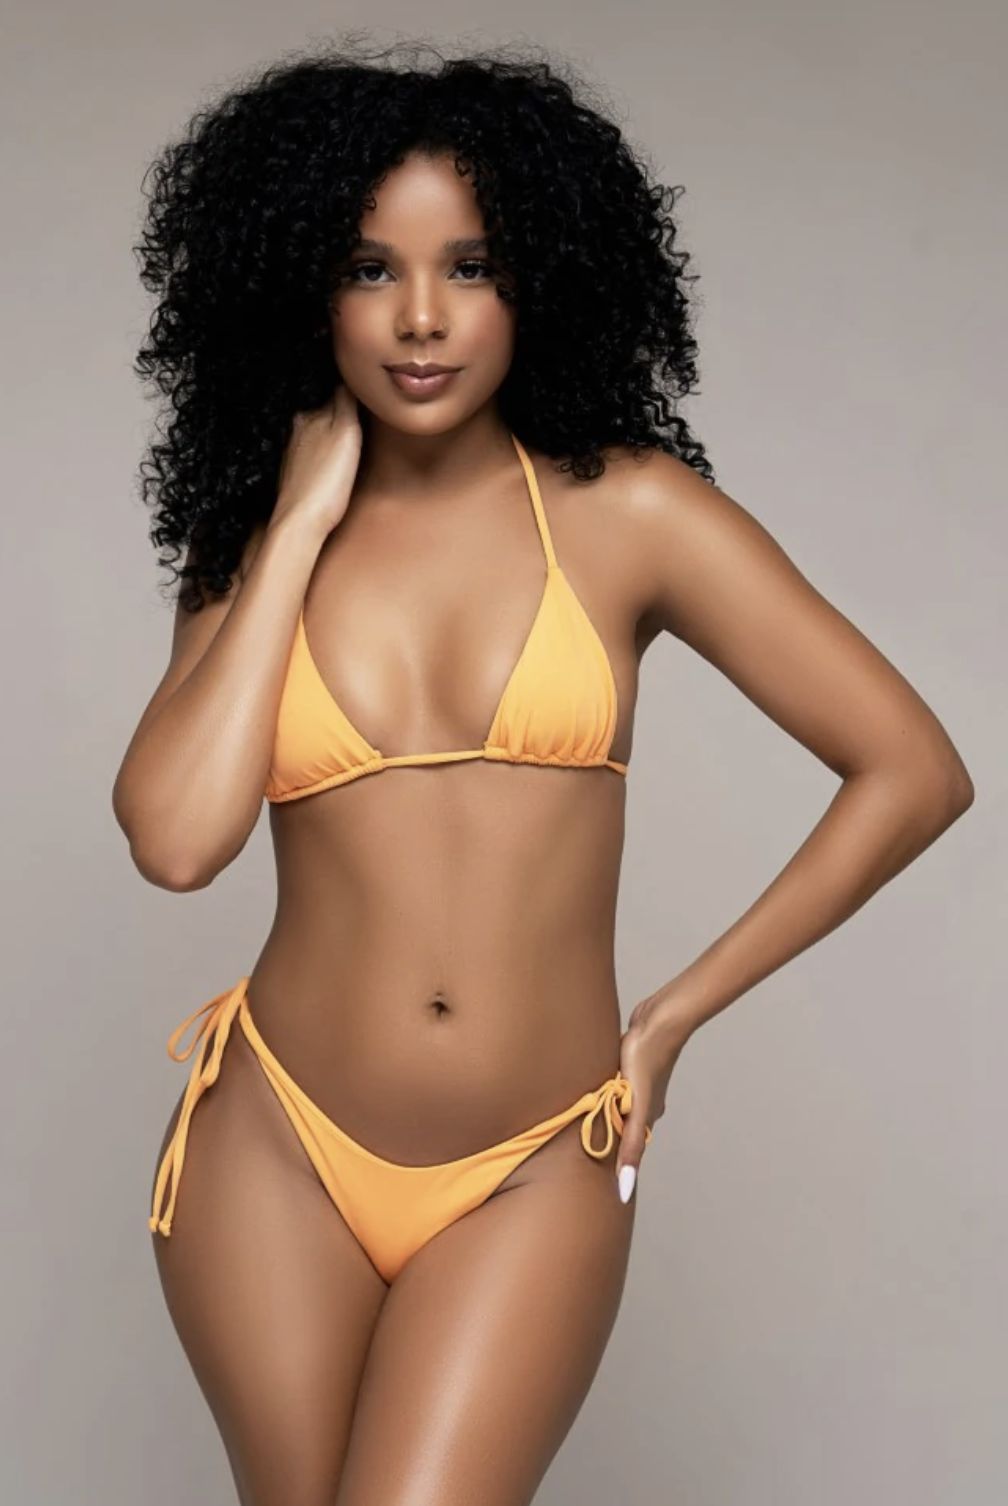 black women in bikinis